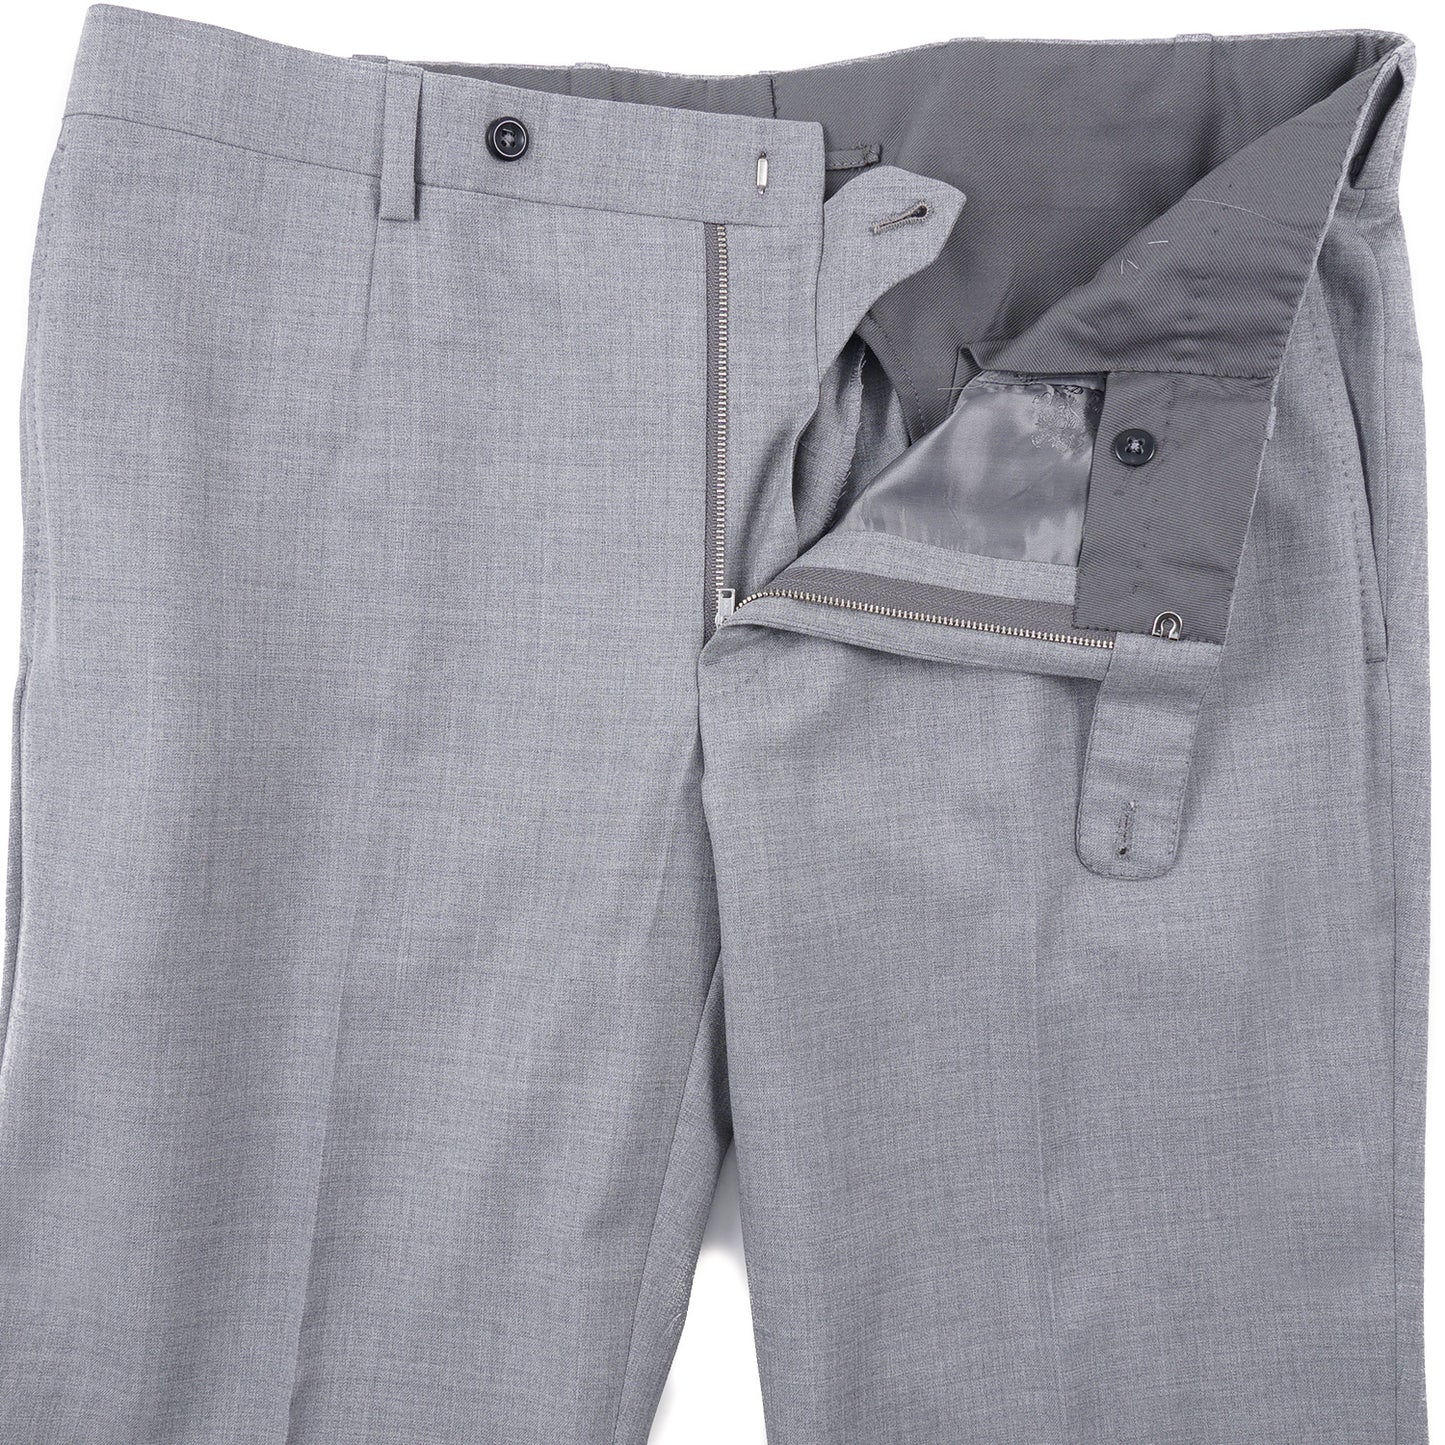 Oxxford Gray Super 140s Wool Pants - Top Shelf Apparel